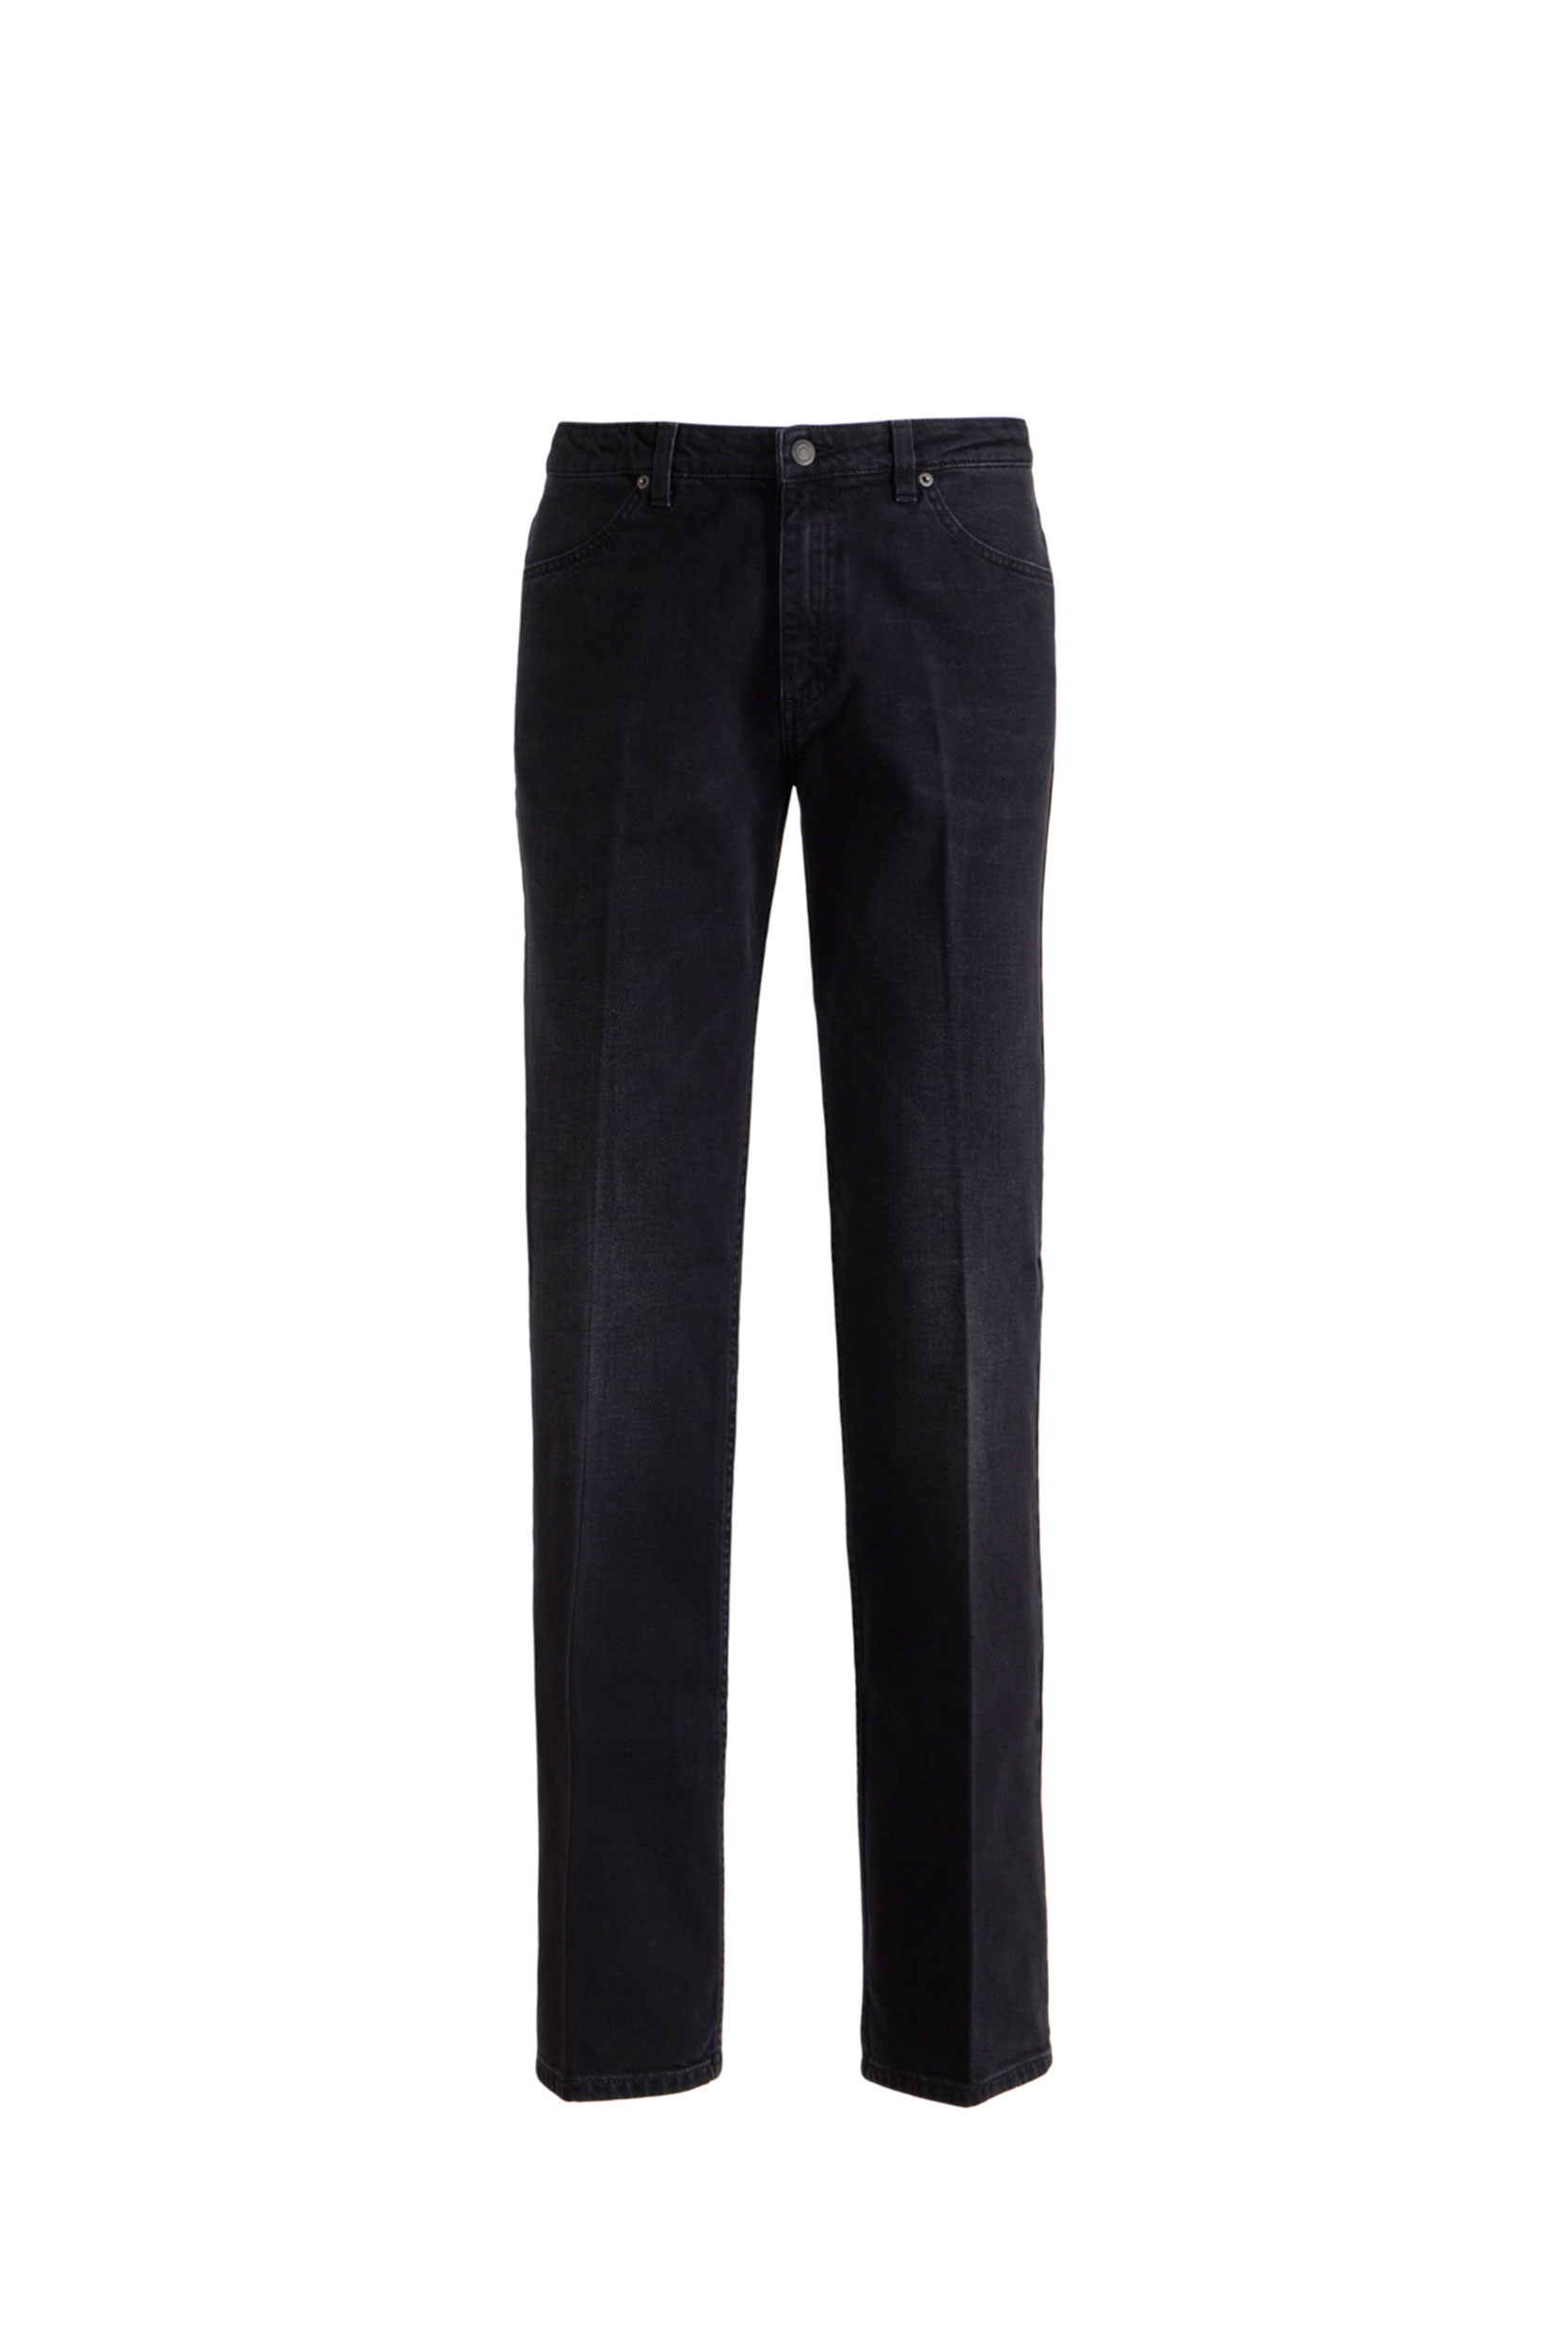 11oz Denim Fabric Enzyme Washed Jeans Cotton Material - 168cm wide -  Classic BLACK Denim - Lush Fabric